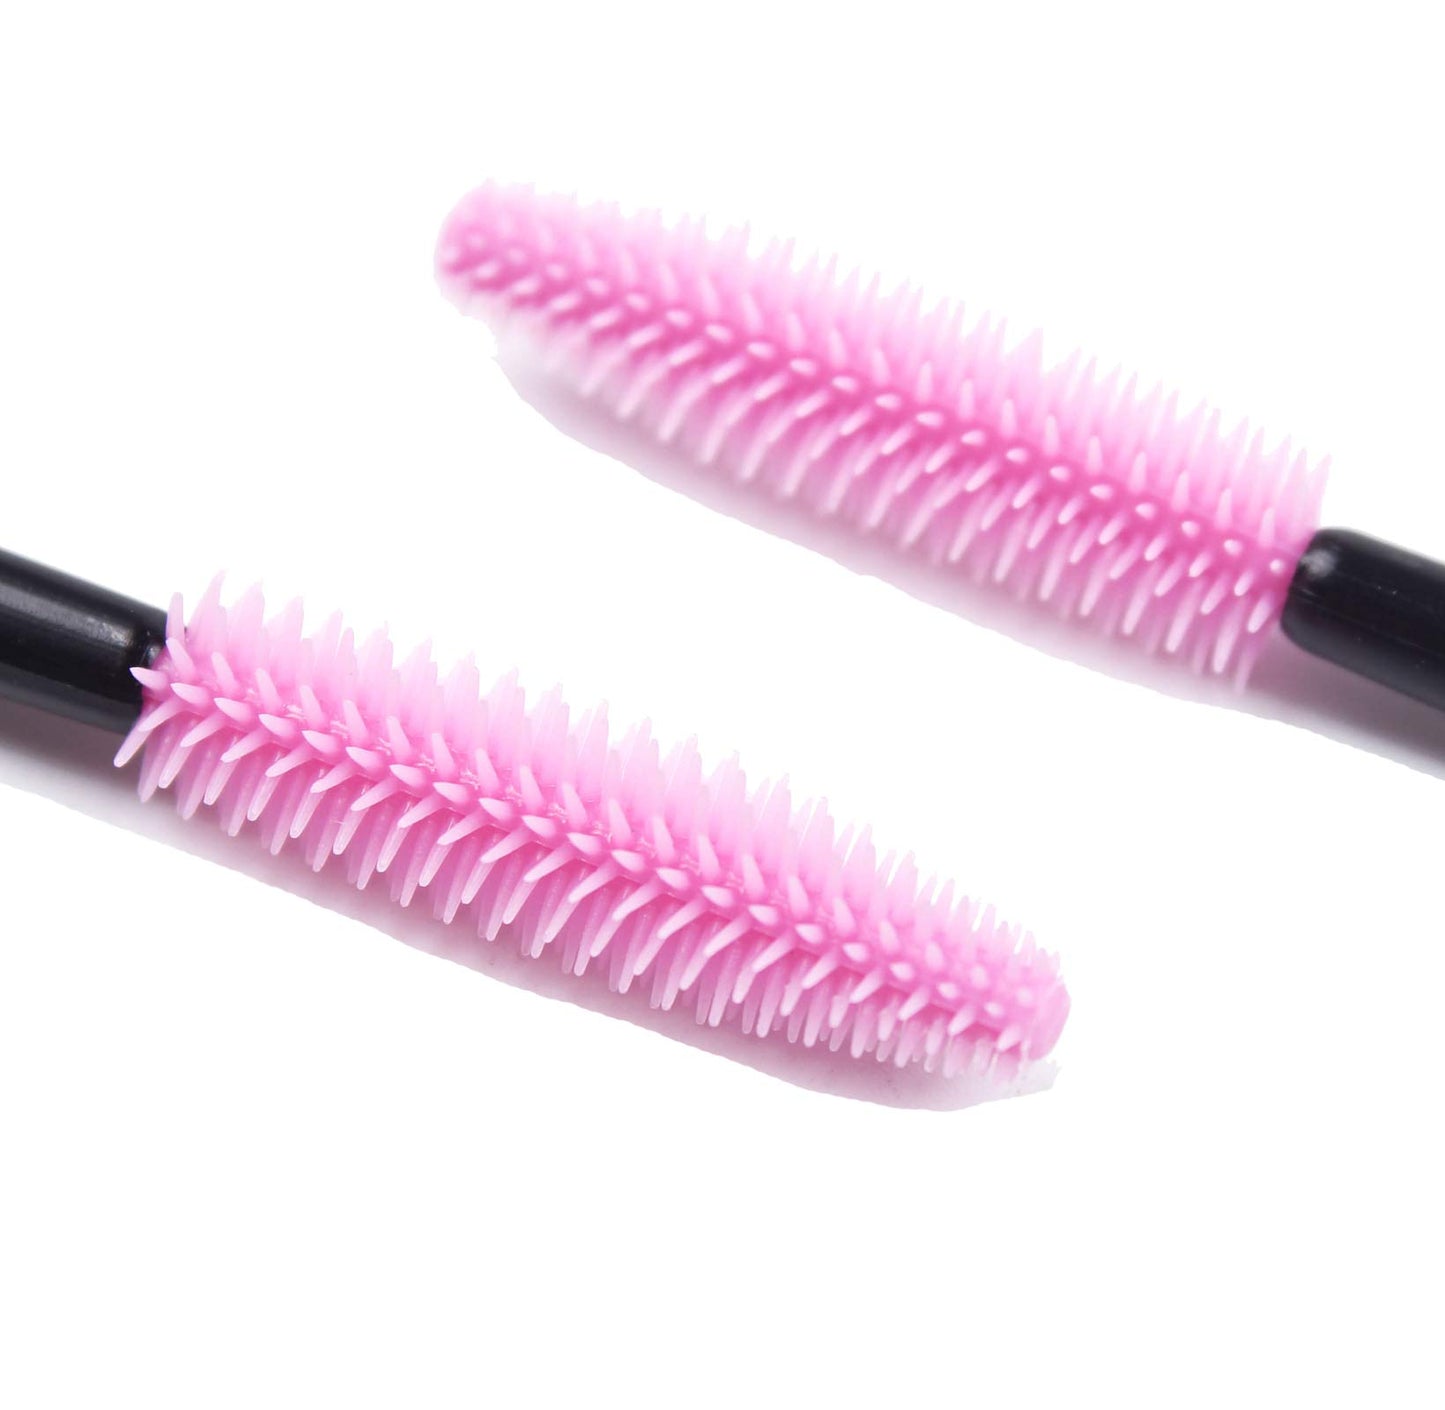 BIHRTC Pack of 100 One-Off Disposable Silicone Eyelash Mascara Brushes Wands Applicator Eyebrow Brush Makeup Tool Kit Set